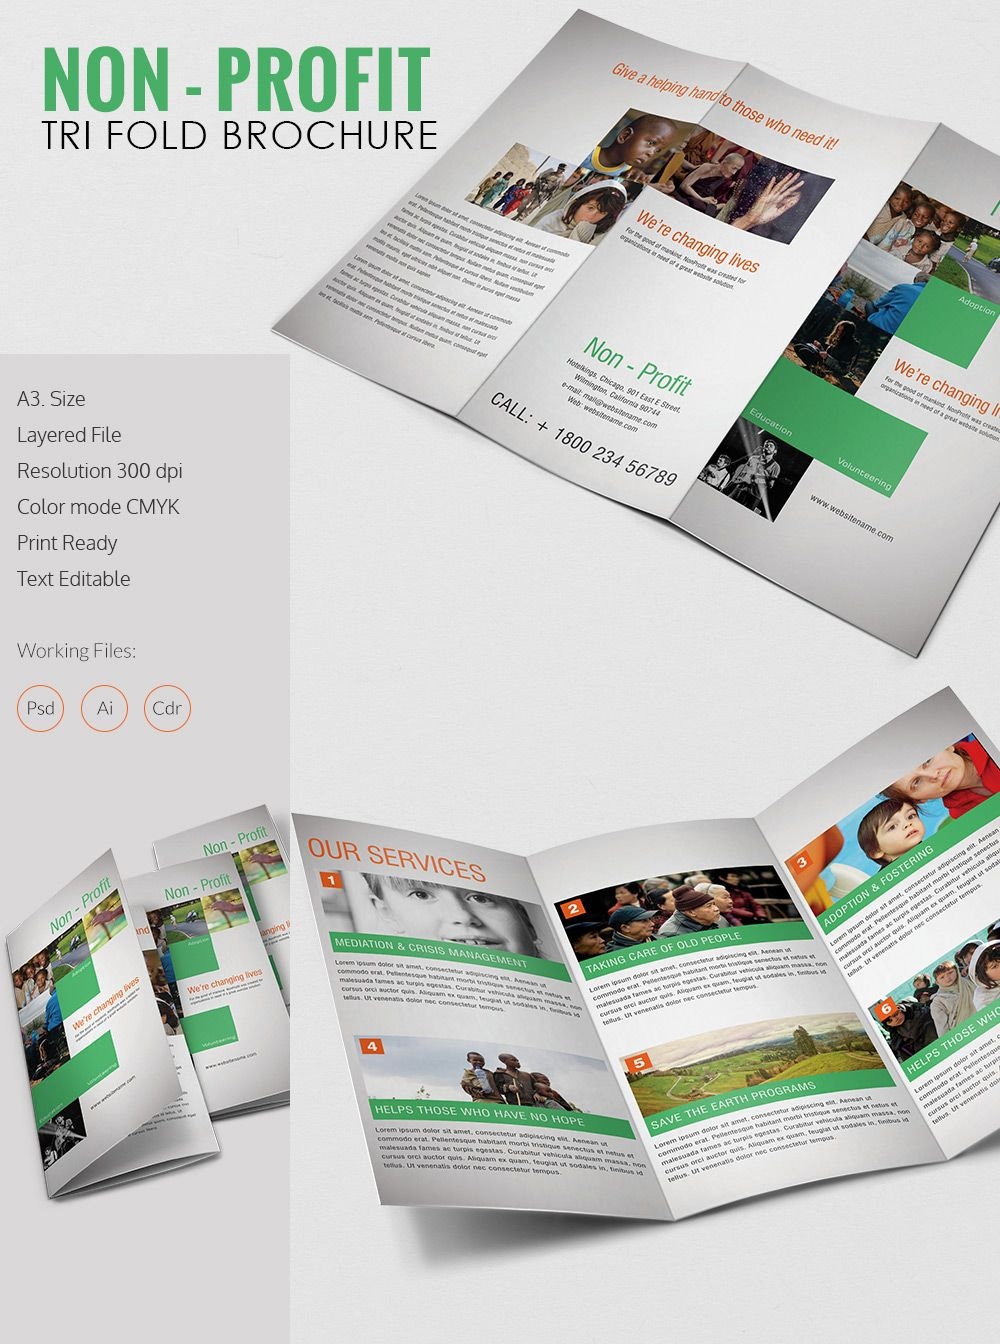 Tri Fold Brochure Template - 43+ Free Word, Pdf, Psd, Eps, Indesign - Free Printable Brochure Maker Download